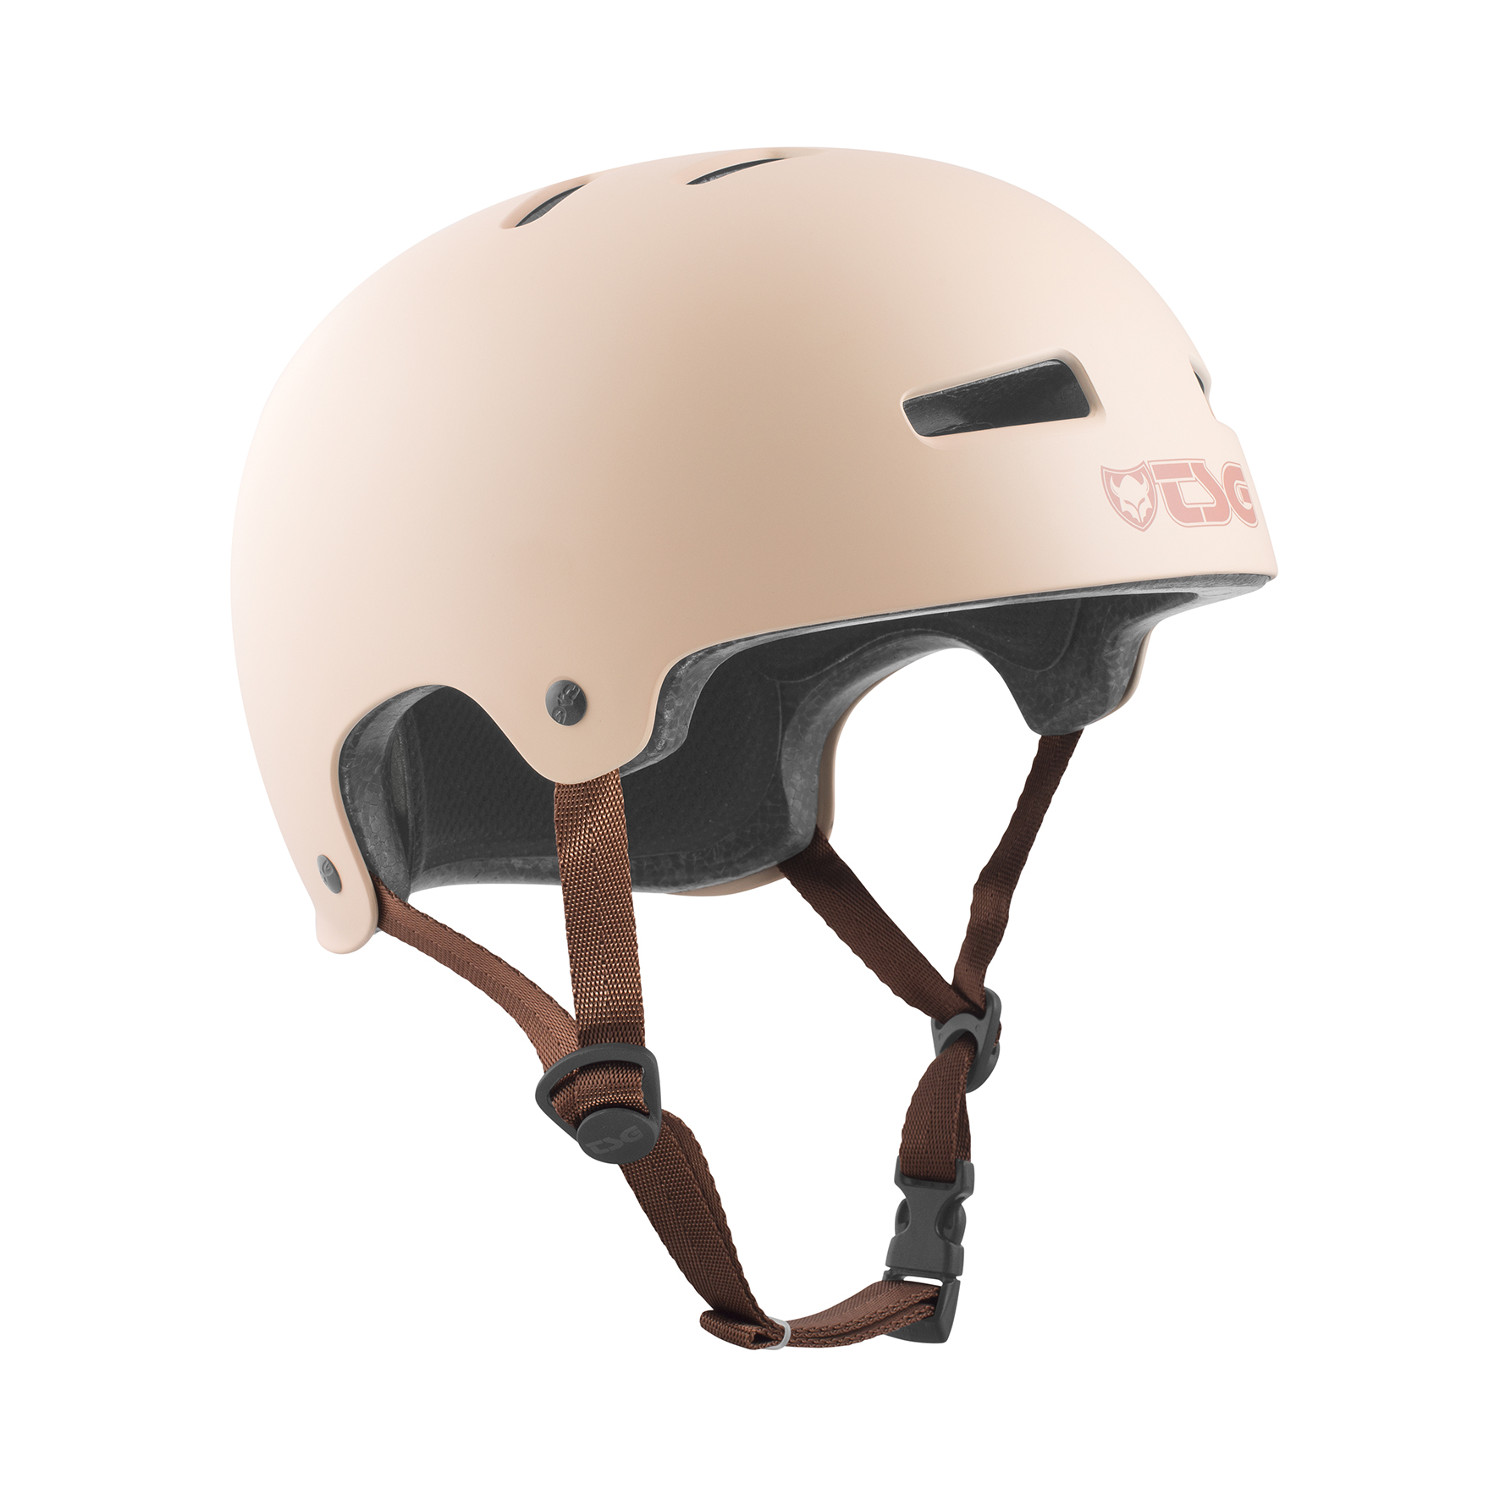 TSG BMX/Dirt Helm Evolution Solid Color - Satin Nude Pale